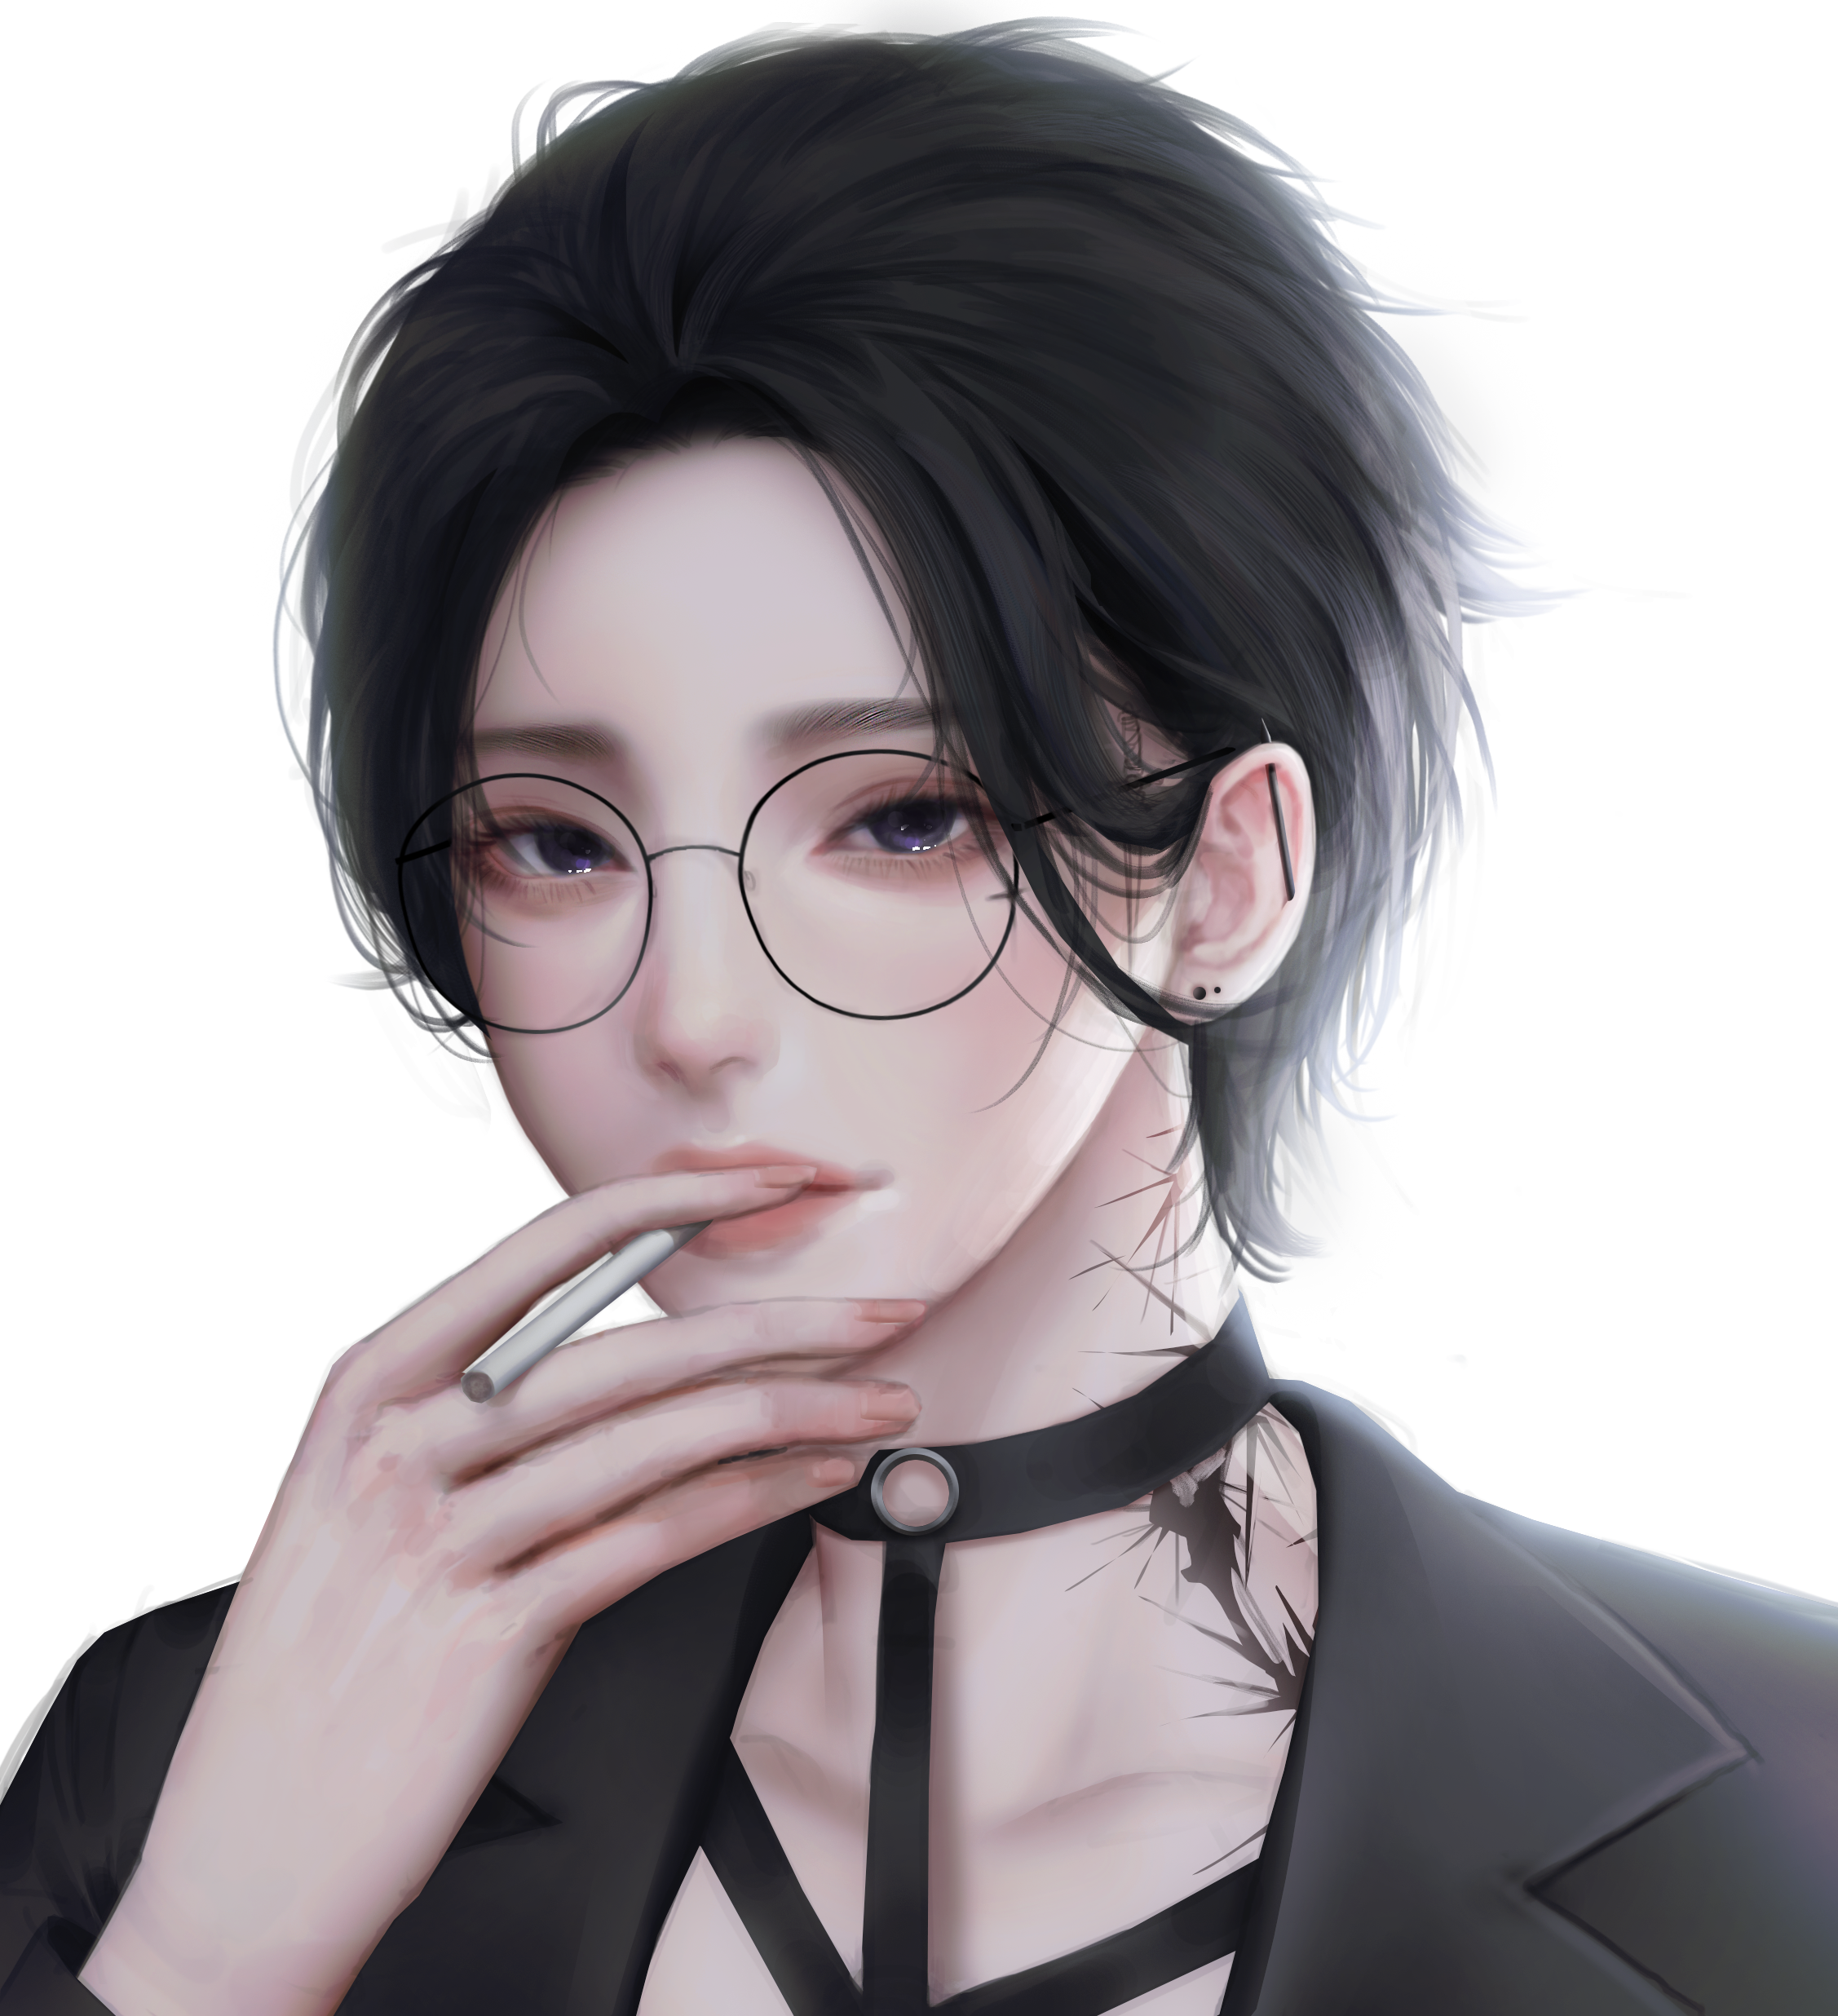 Fantasy Girl Painting Yong Jun Park Glasses Cigarettes Black Hair Black Background Smoking 2254x2472